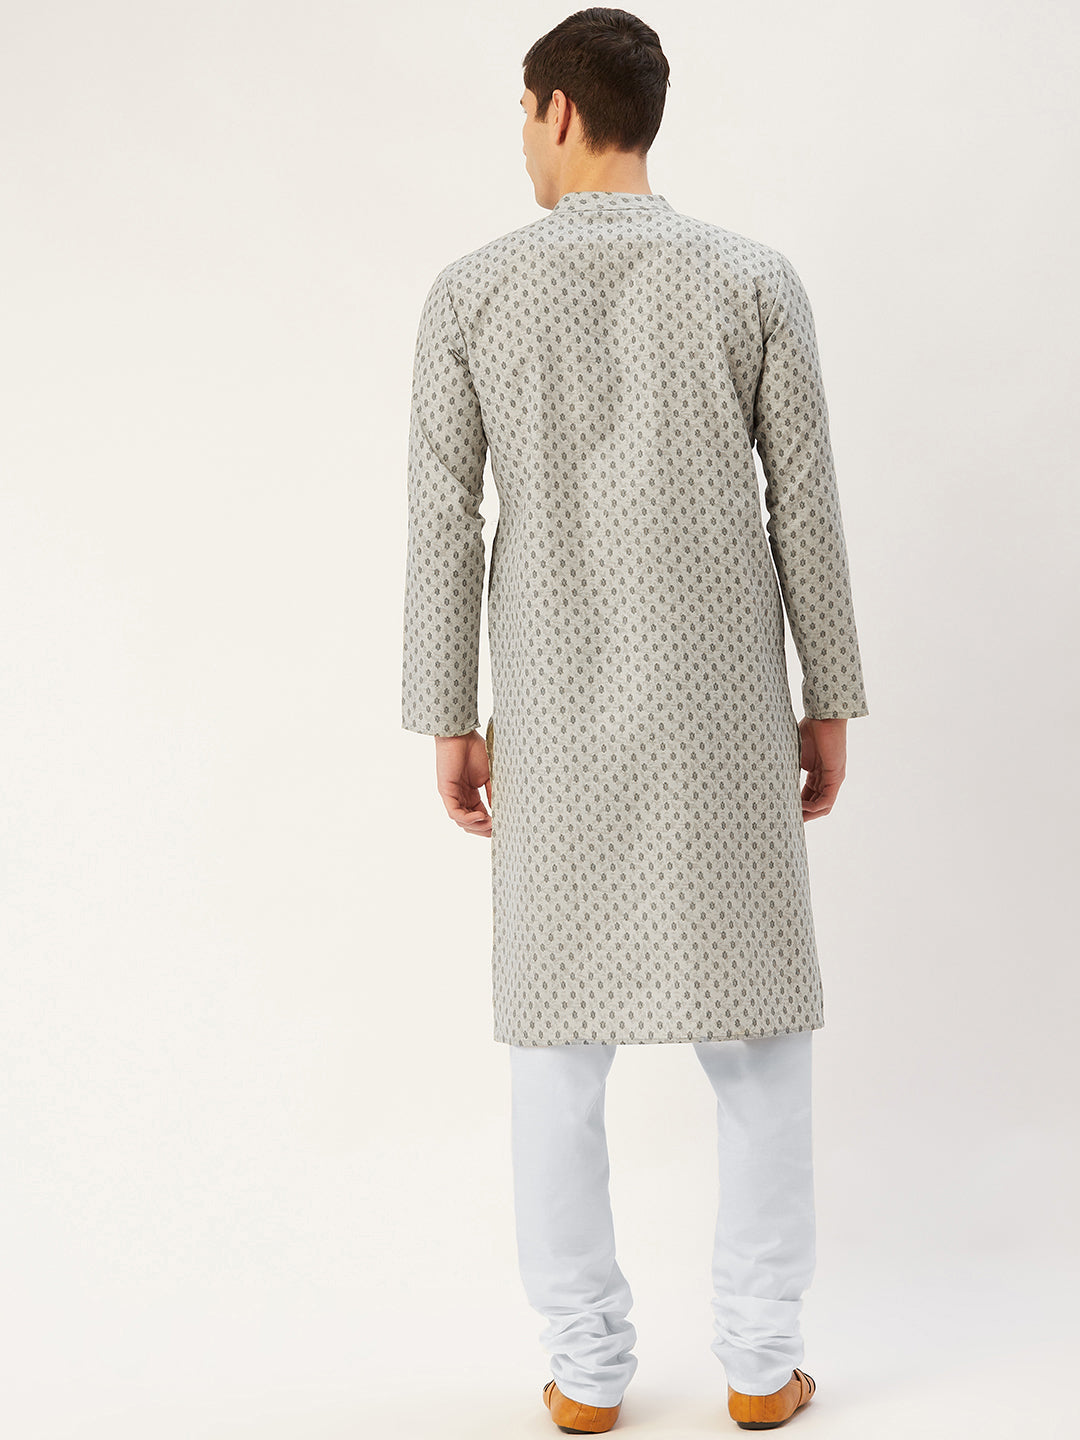 Jompers Men's Grey Cotton printed kurta Pyjama Set